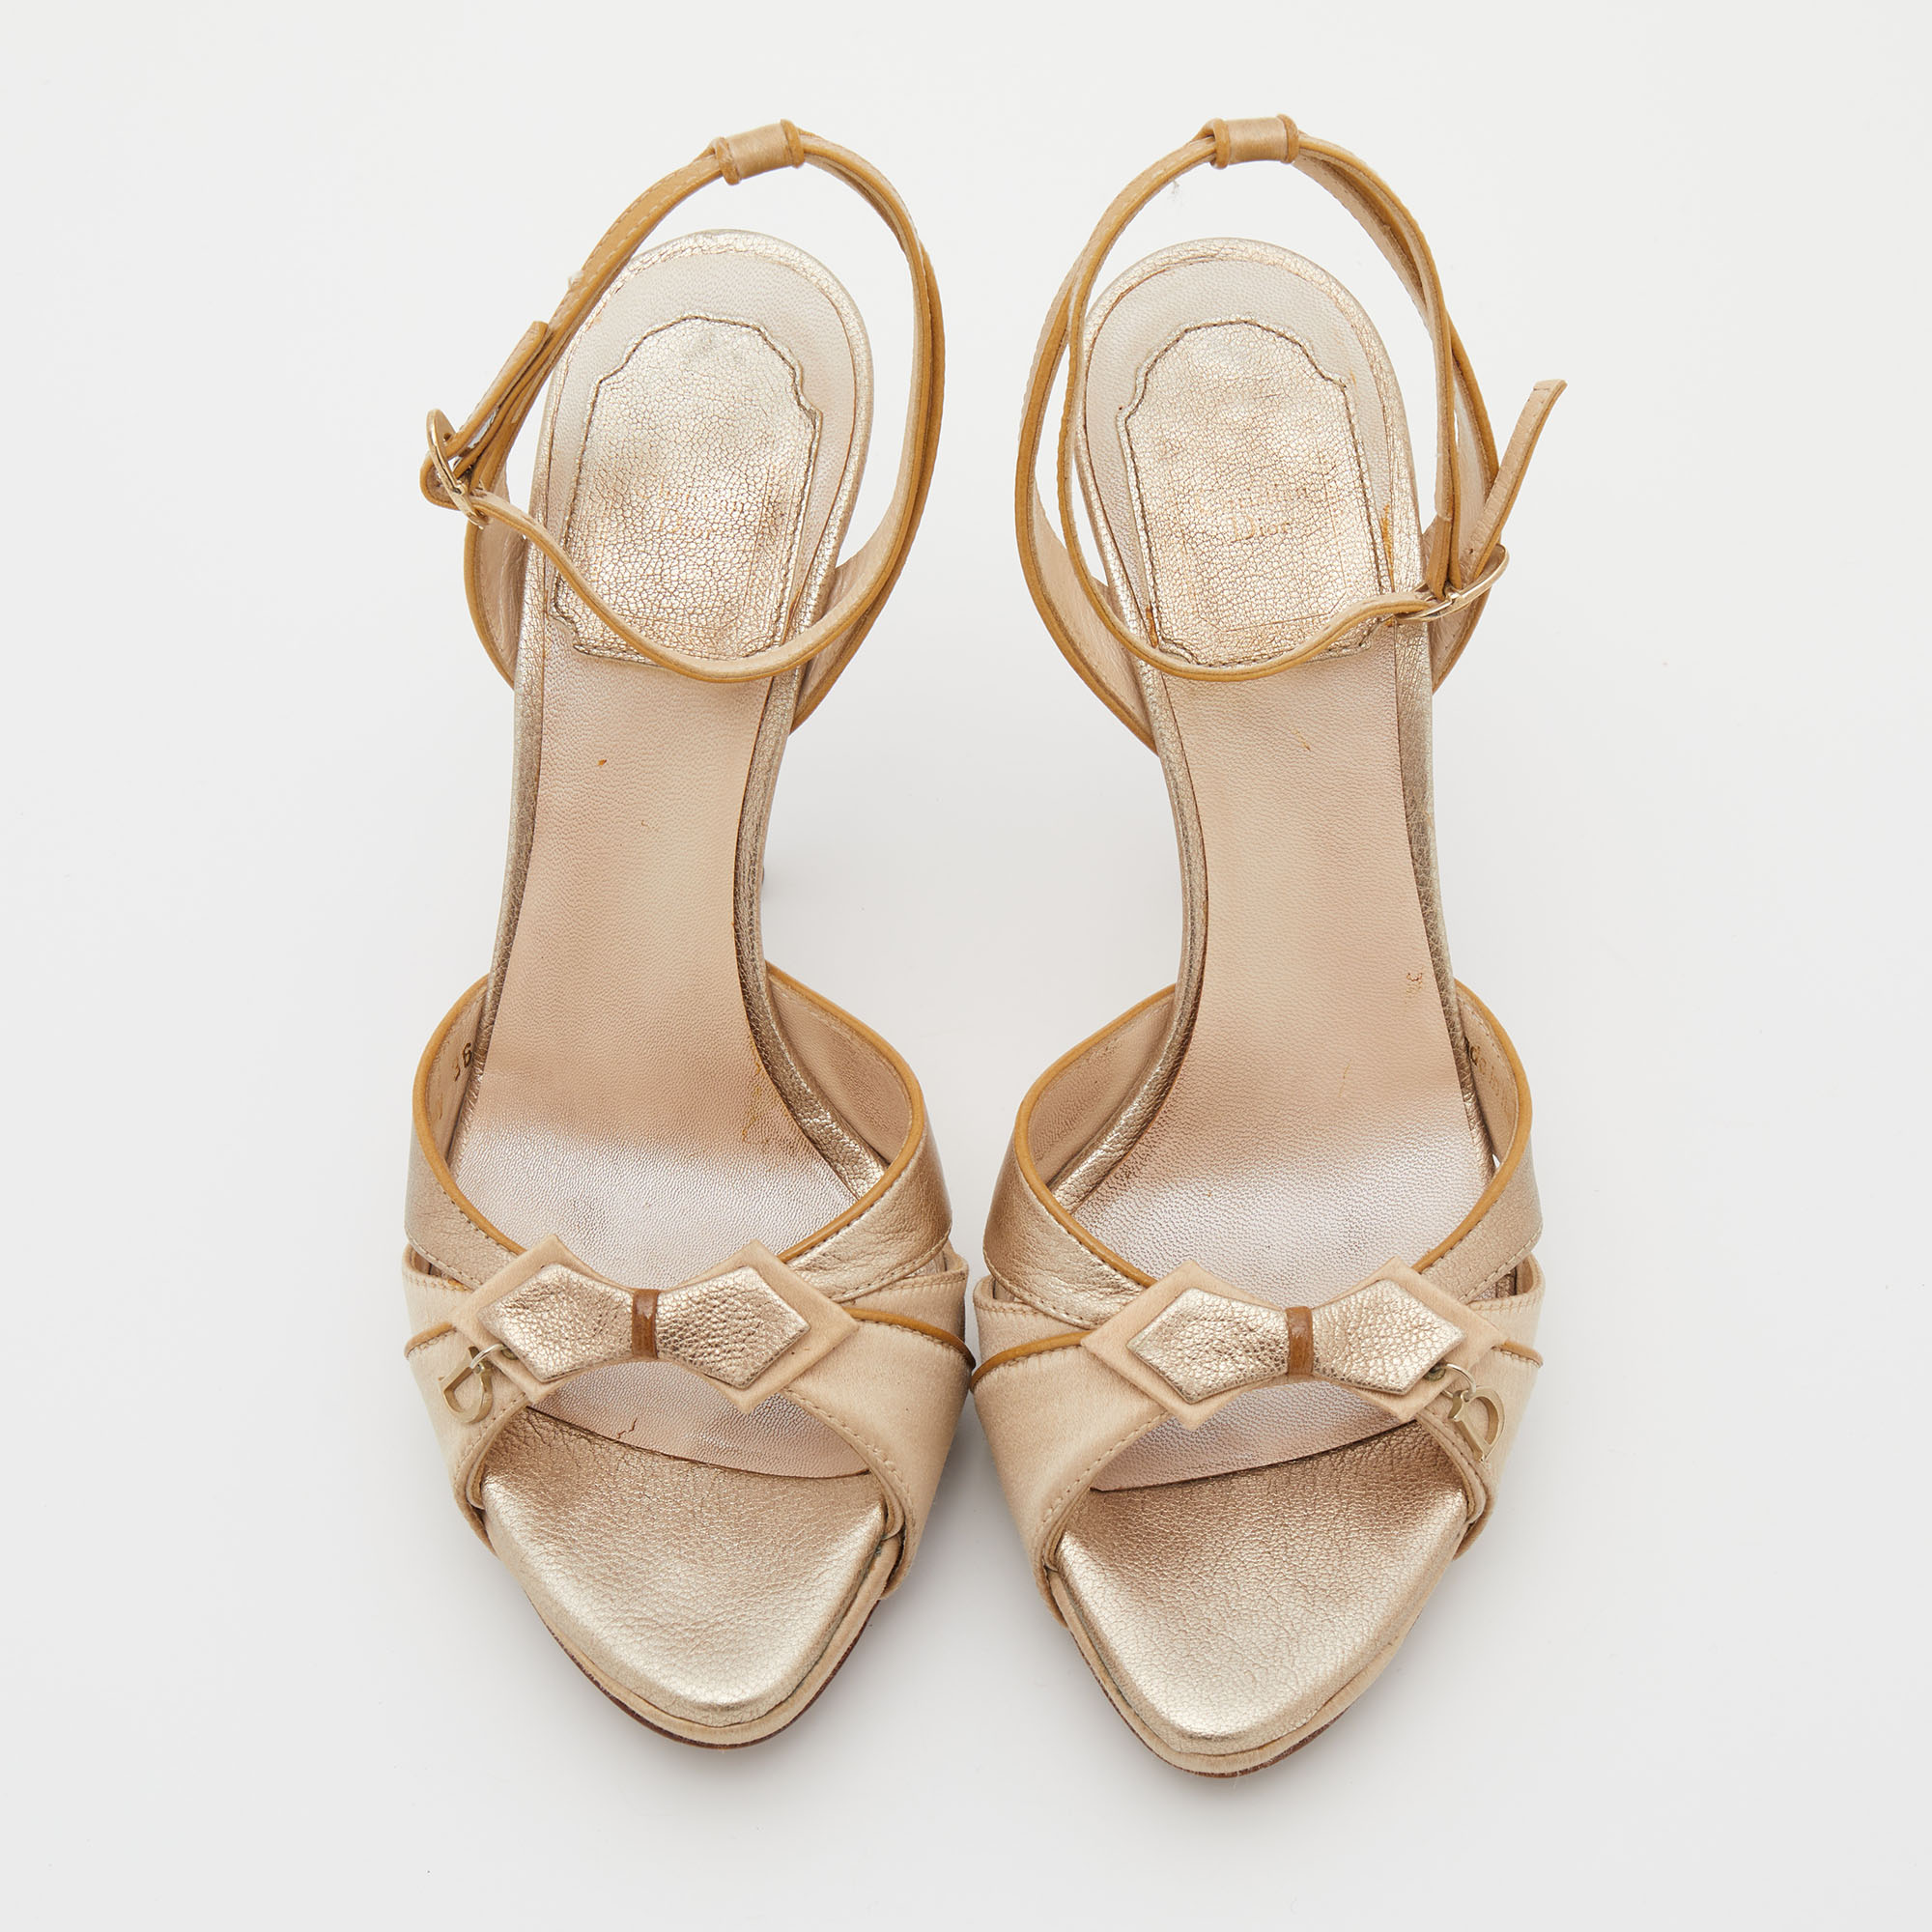 Dior Metallic Gold/Beige Leather And Satin Platform Ankle Strap Sandals Size 38